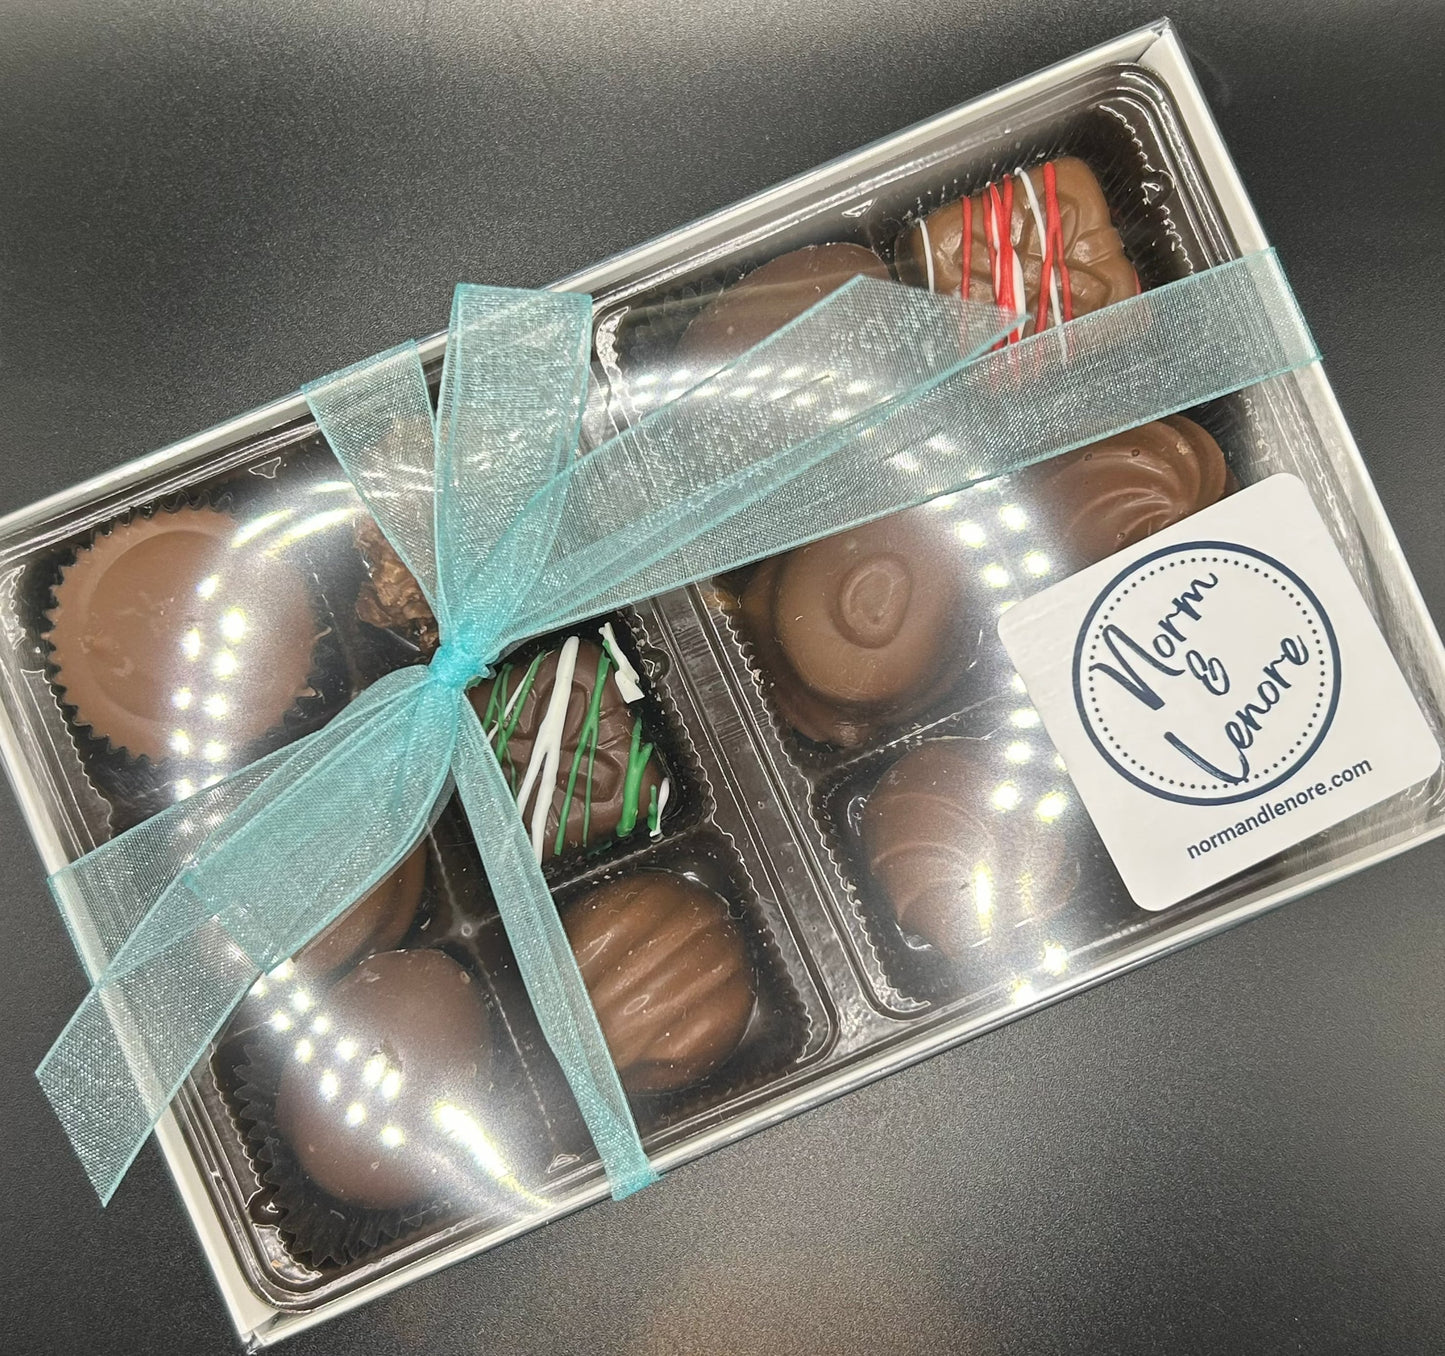 Wholesale Boxed Assorted Chocolates